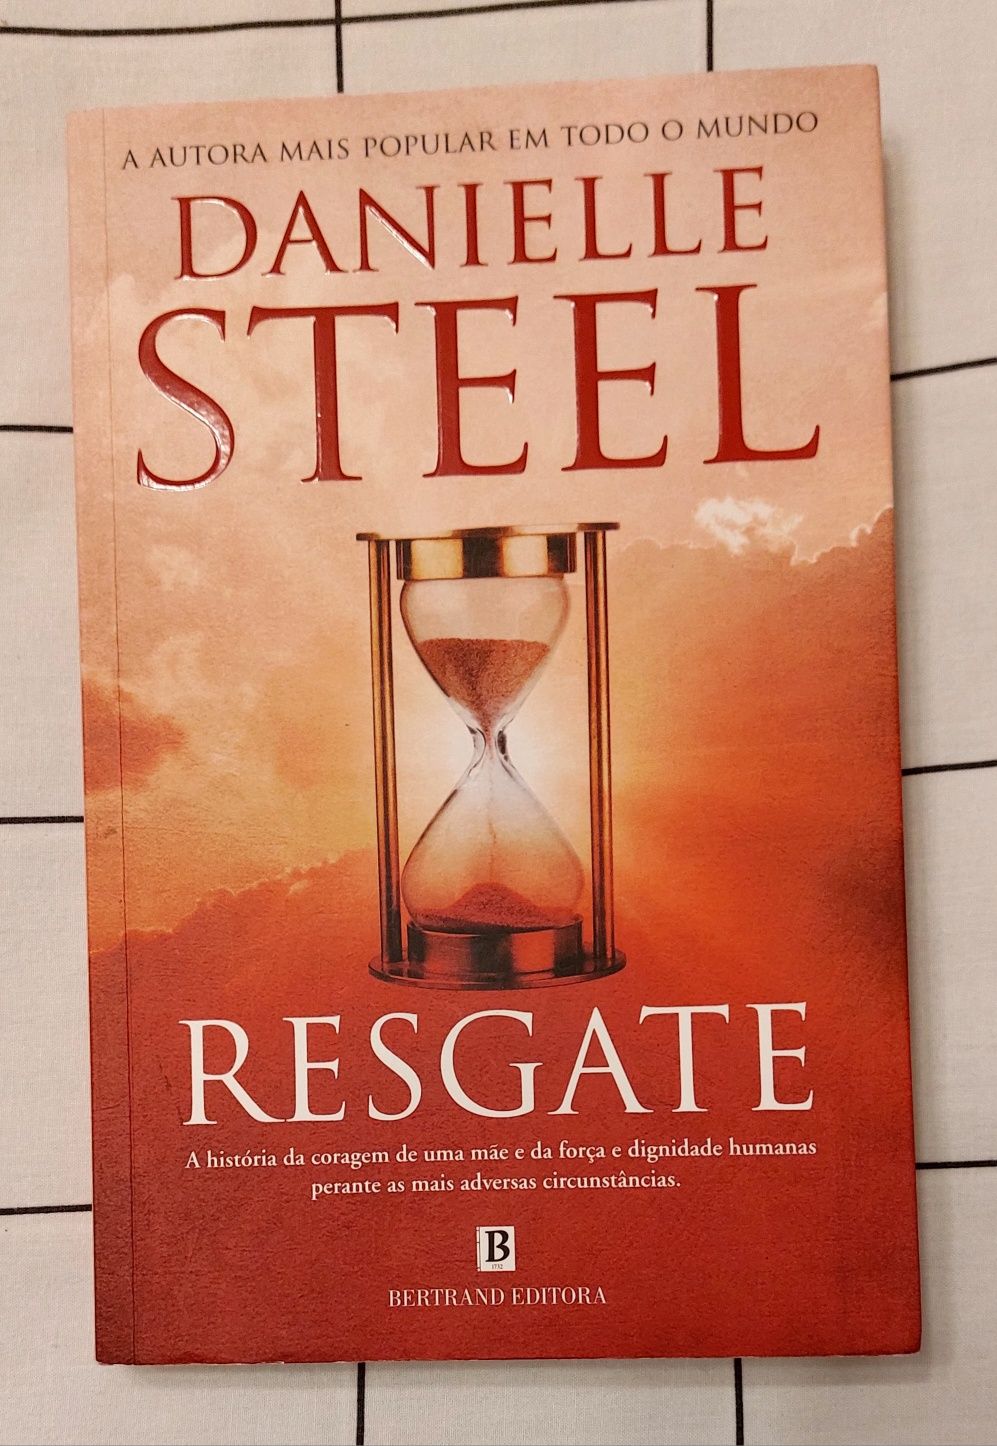 "Resgate" de Danielle Steel